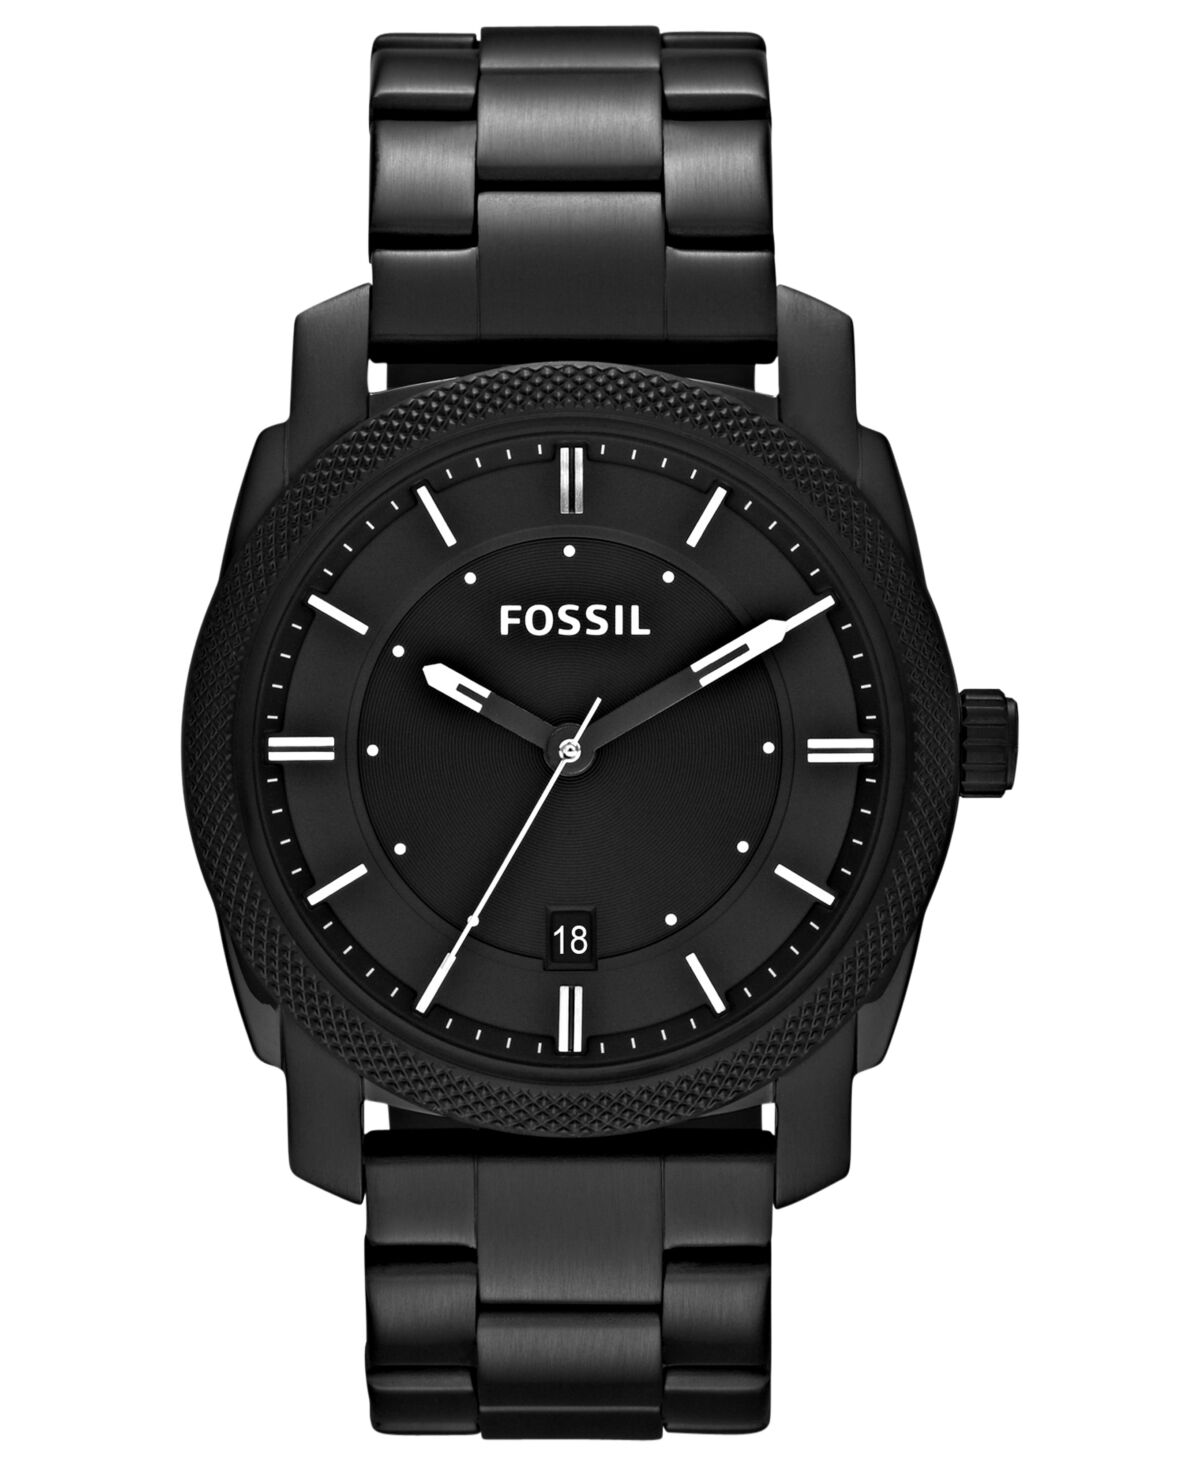 Fossil Men's Machine Black Tone Stainless Steel Bracelet Watch 42mm - Black